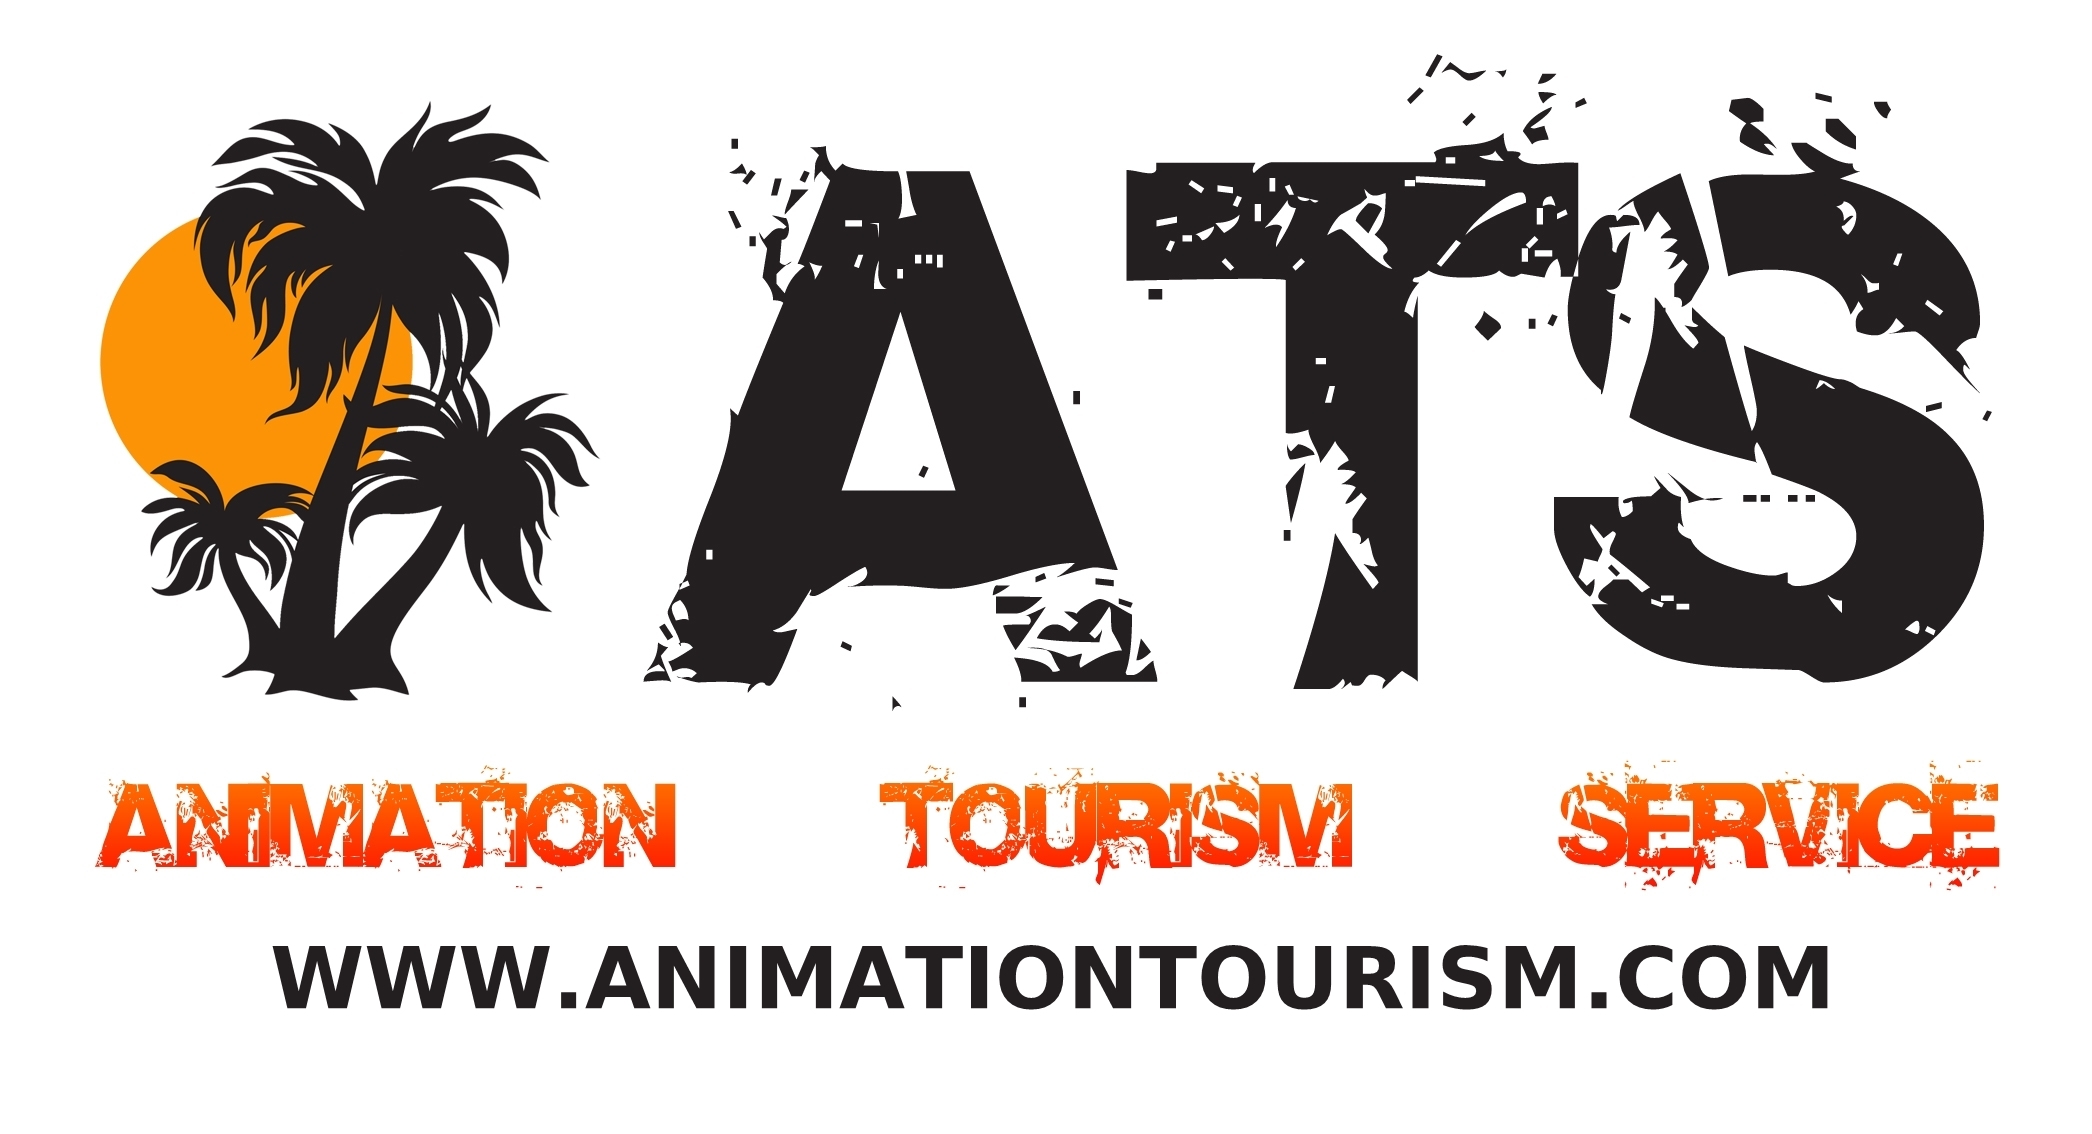 ANIMATION TOURISM SERVICE